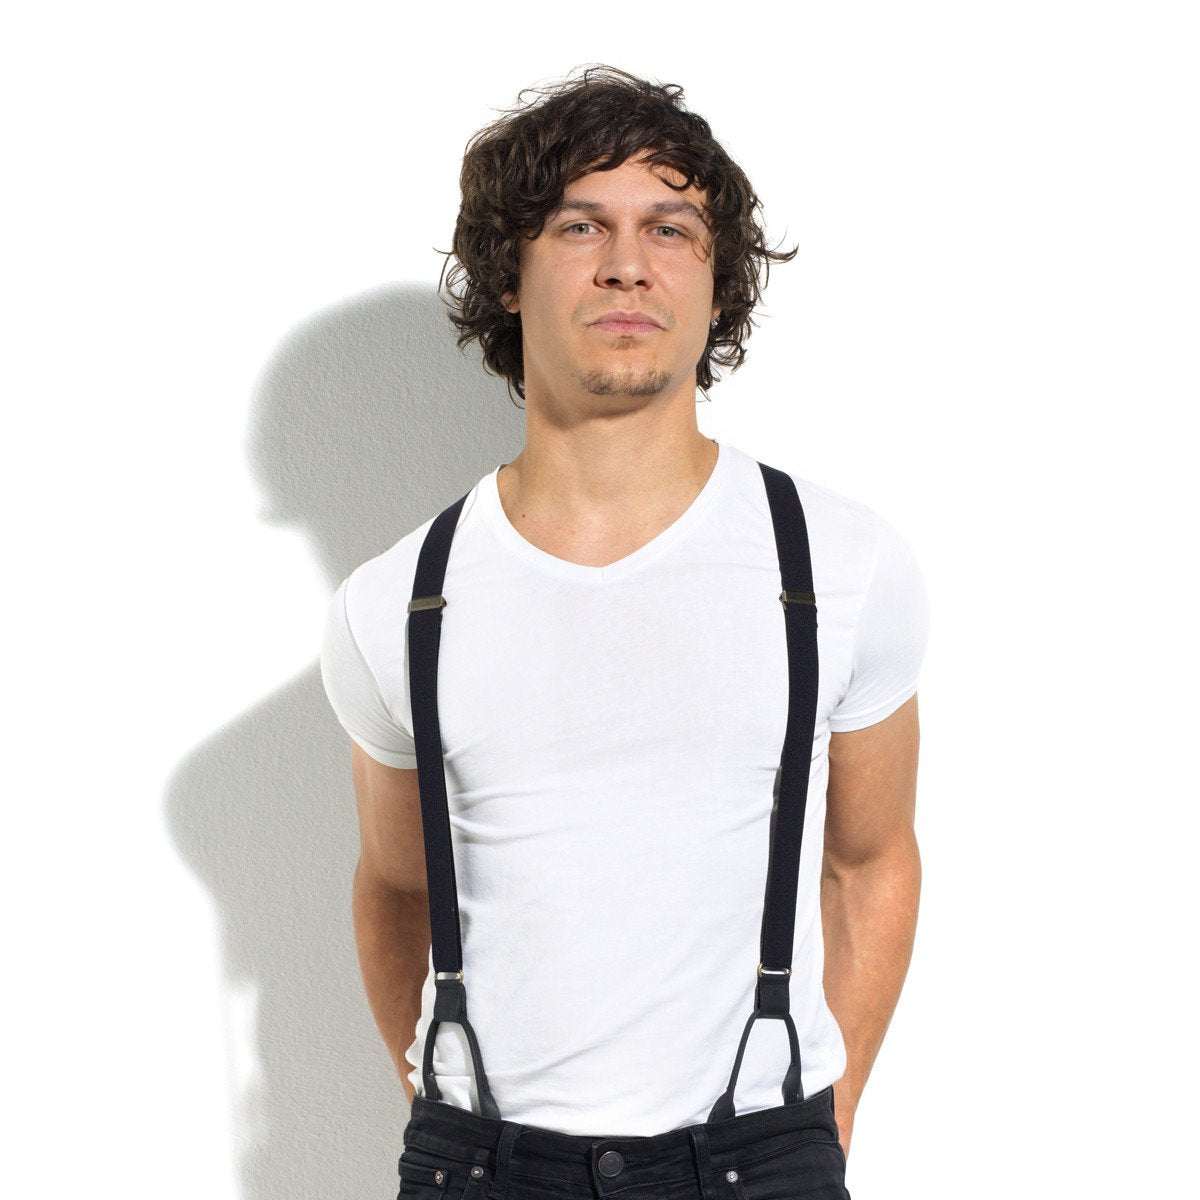 Soul Suspenders Black slim straps (1 inch/2.54 cm) - Wiseguy Suspenders